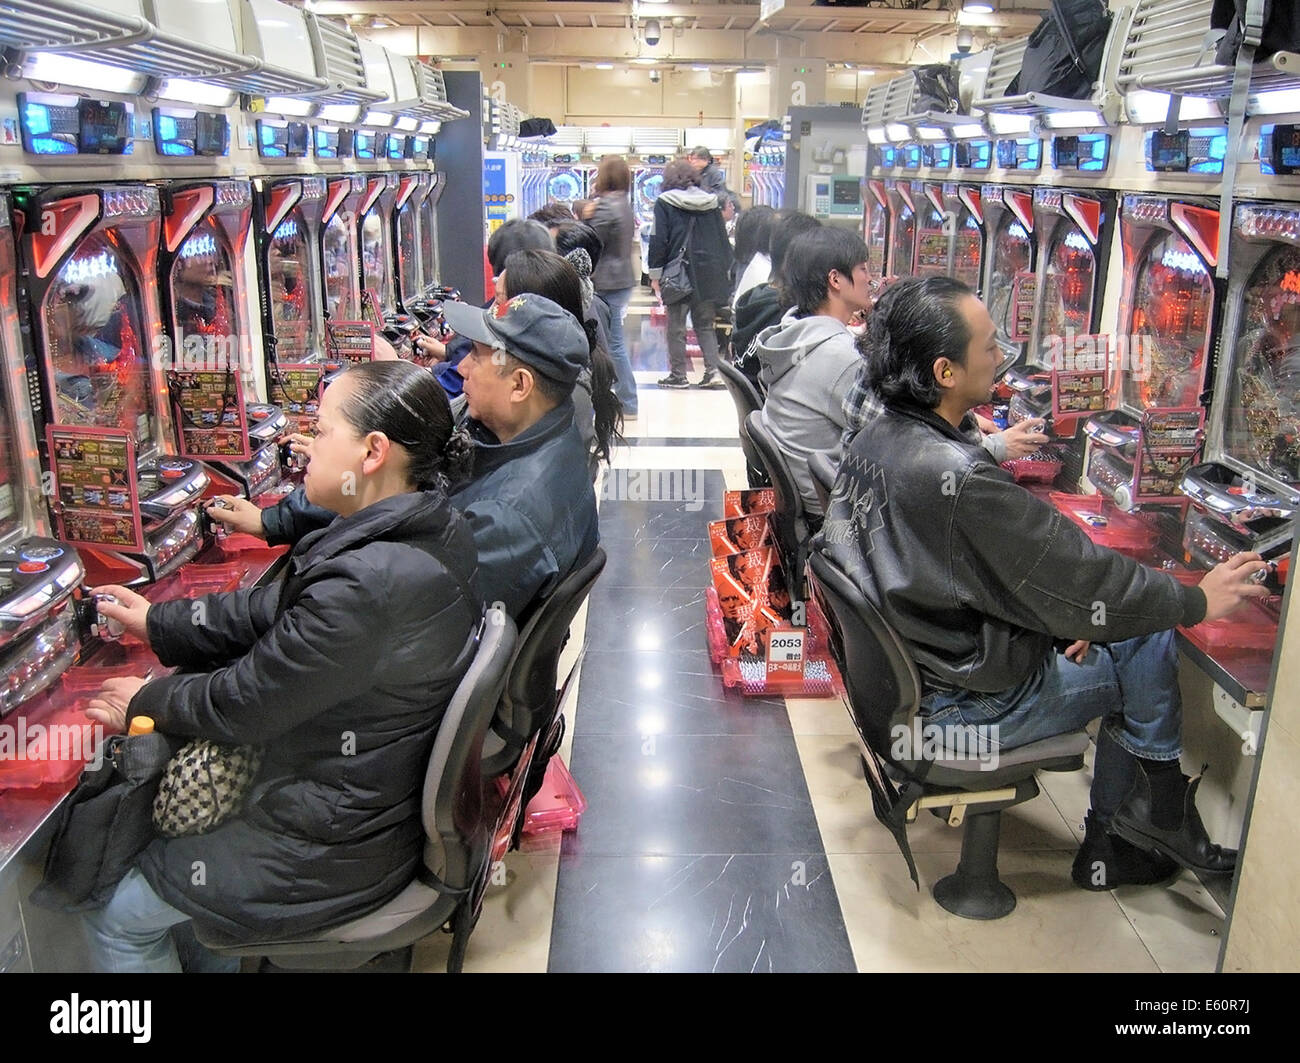 Tokyo, Japan - March 23, 2009: Men gambling on Pachinko slot machines in a Pachinko arcade hall in Tokyo. Stock Photo